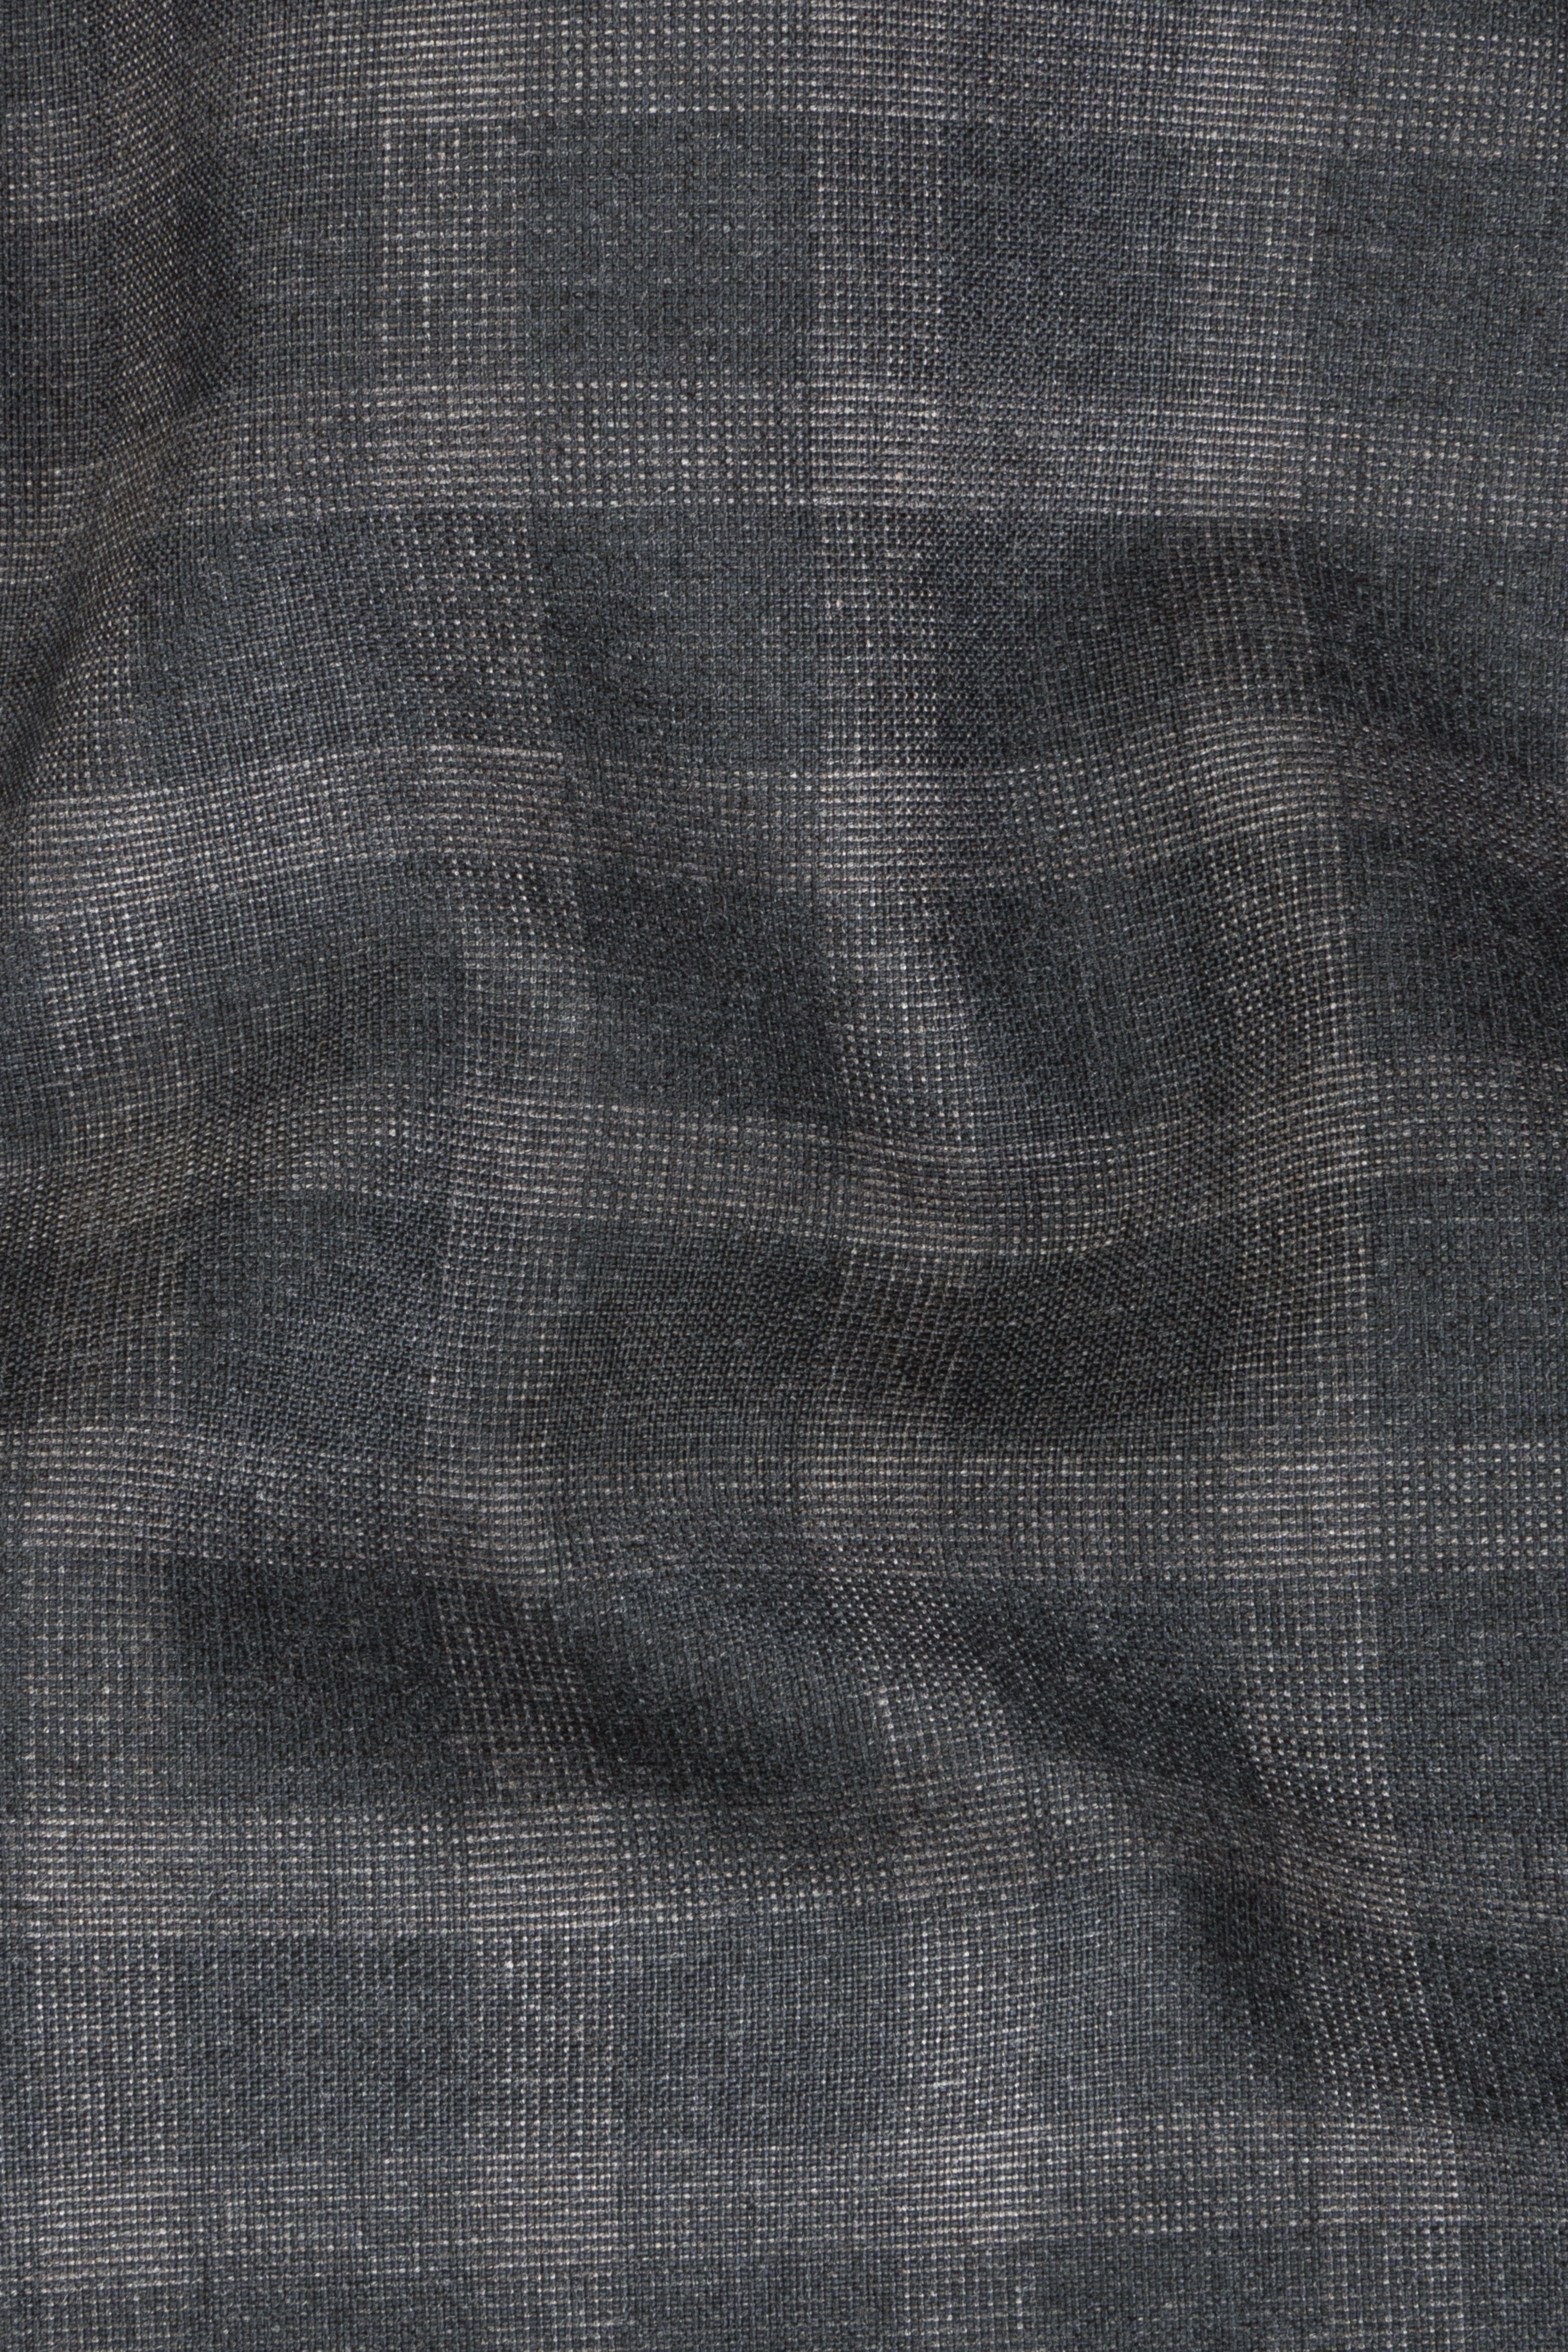 Gravel Gray Checkered Wool Blend Single Breasted Blazer